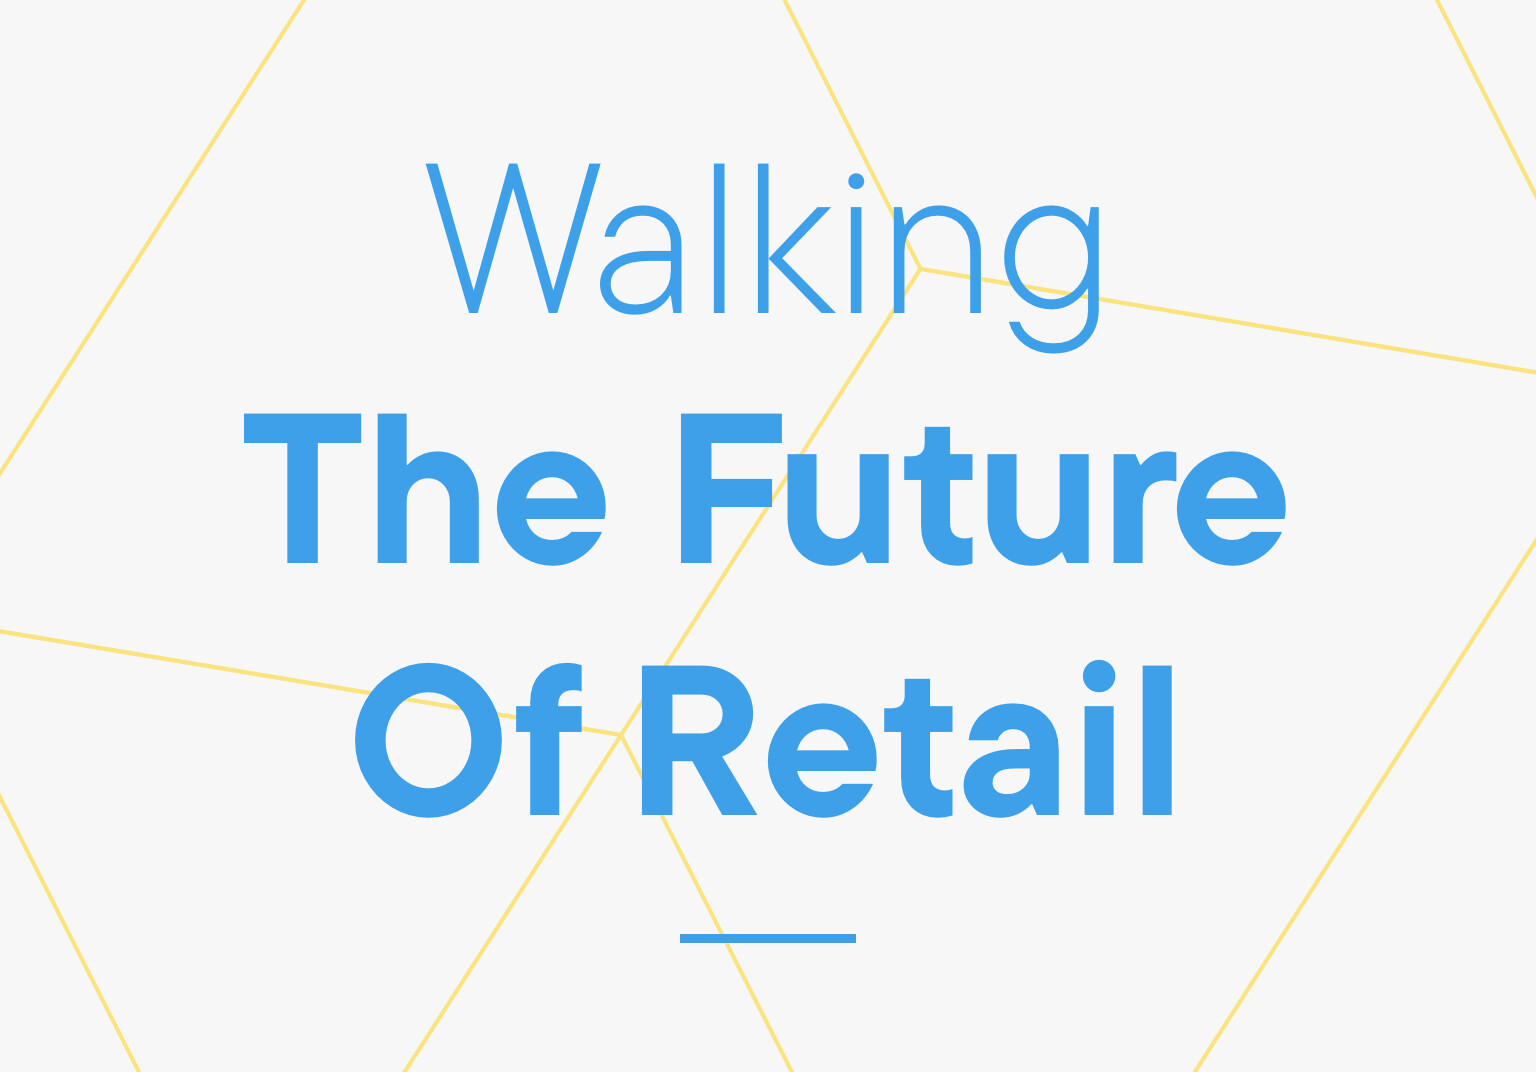 Walking the Future of Retail